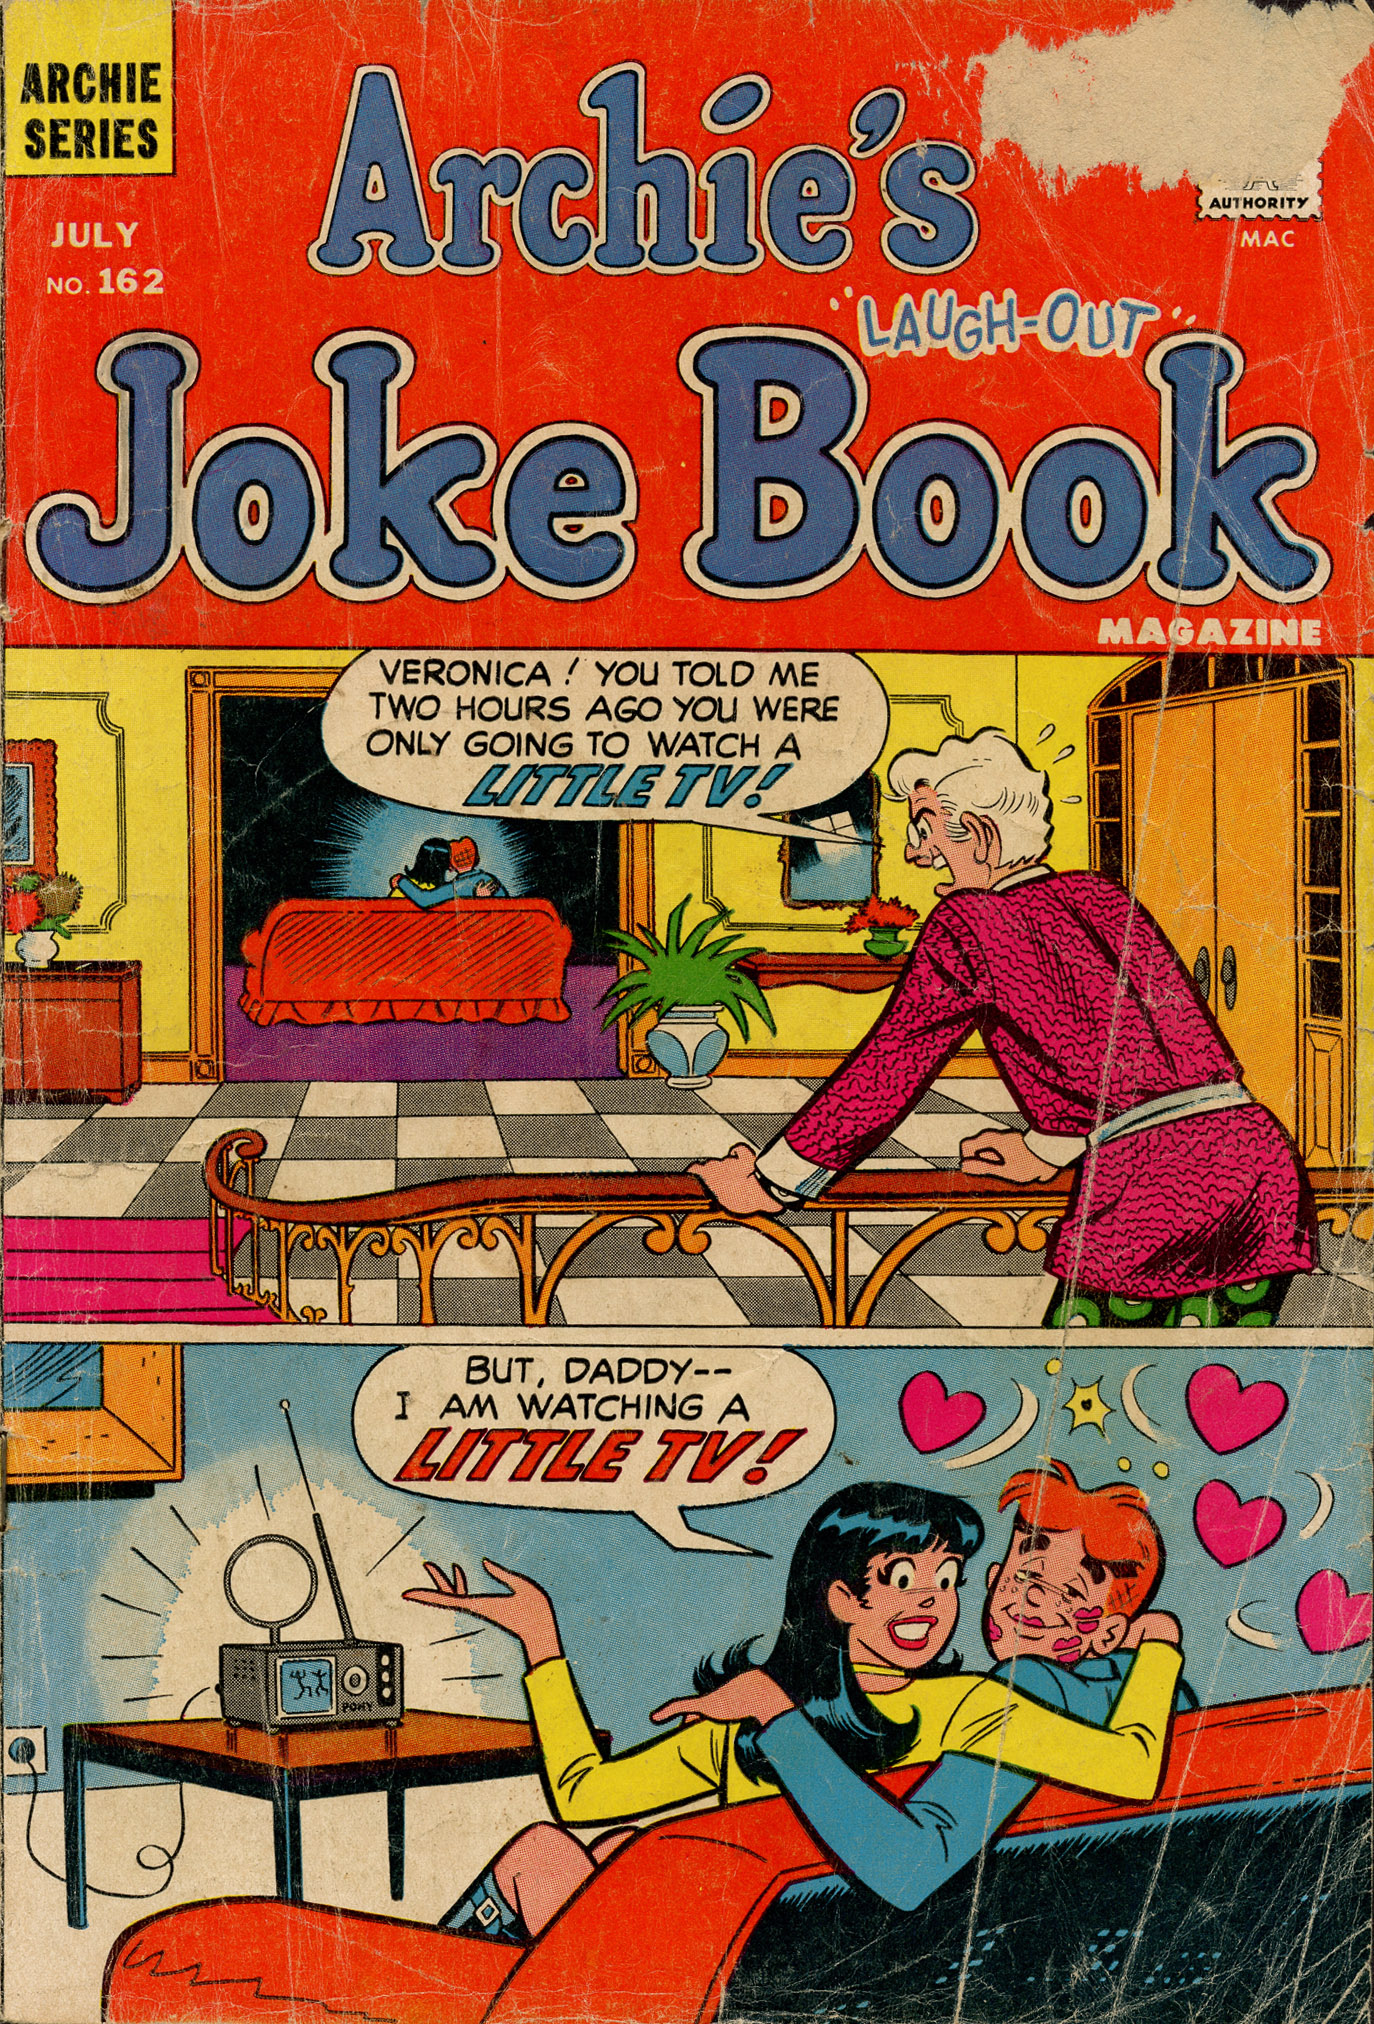 Read online Archie's Joke Book Magazine comic -  Issue #162 - 1